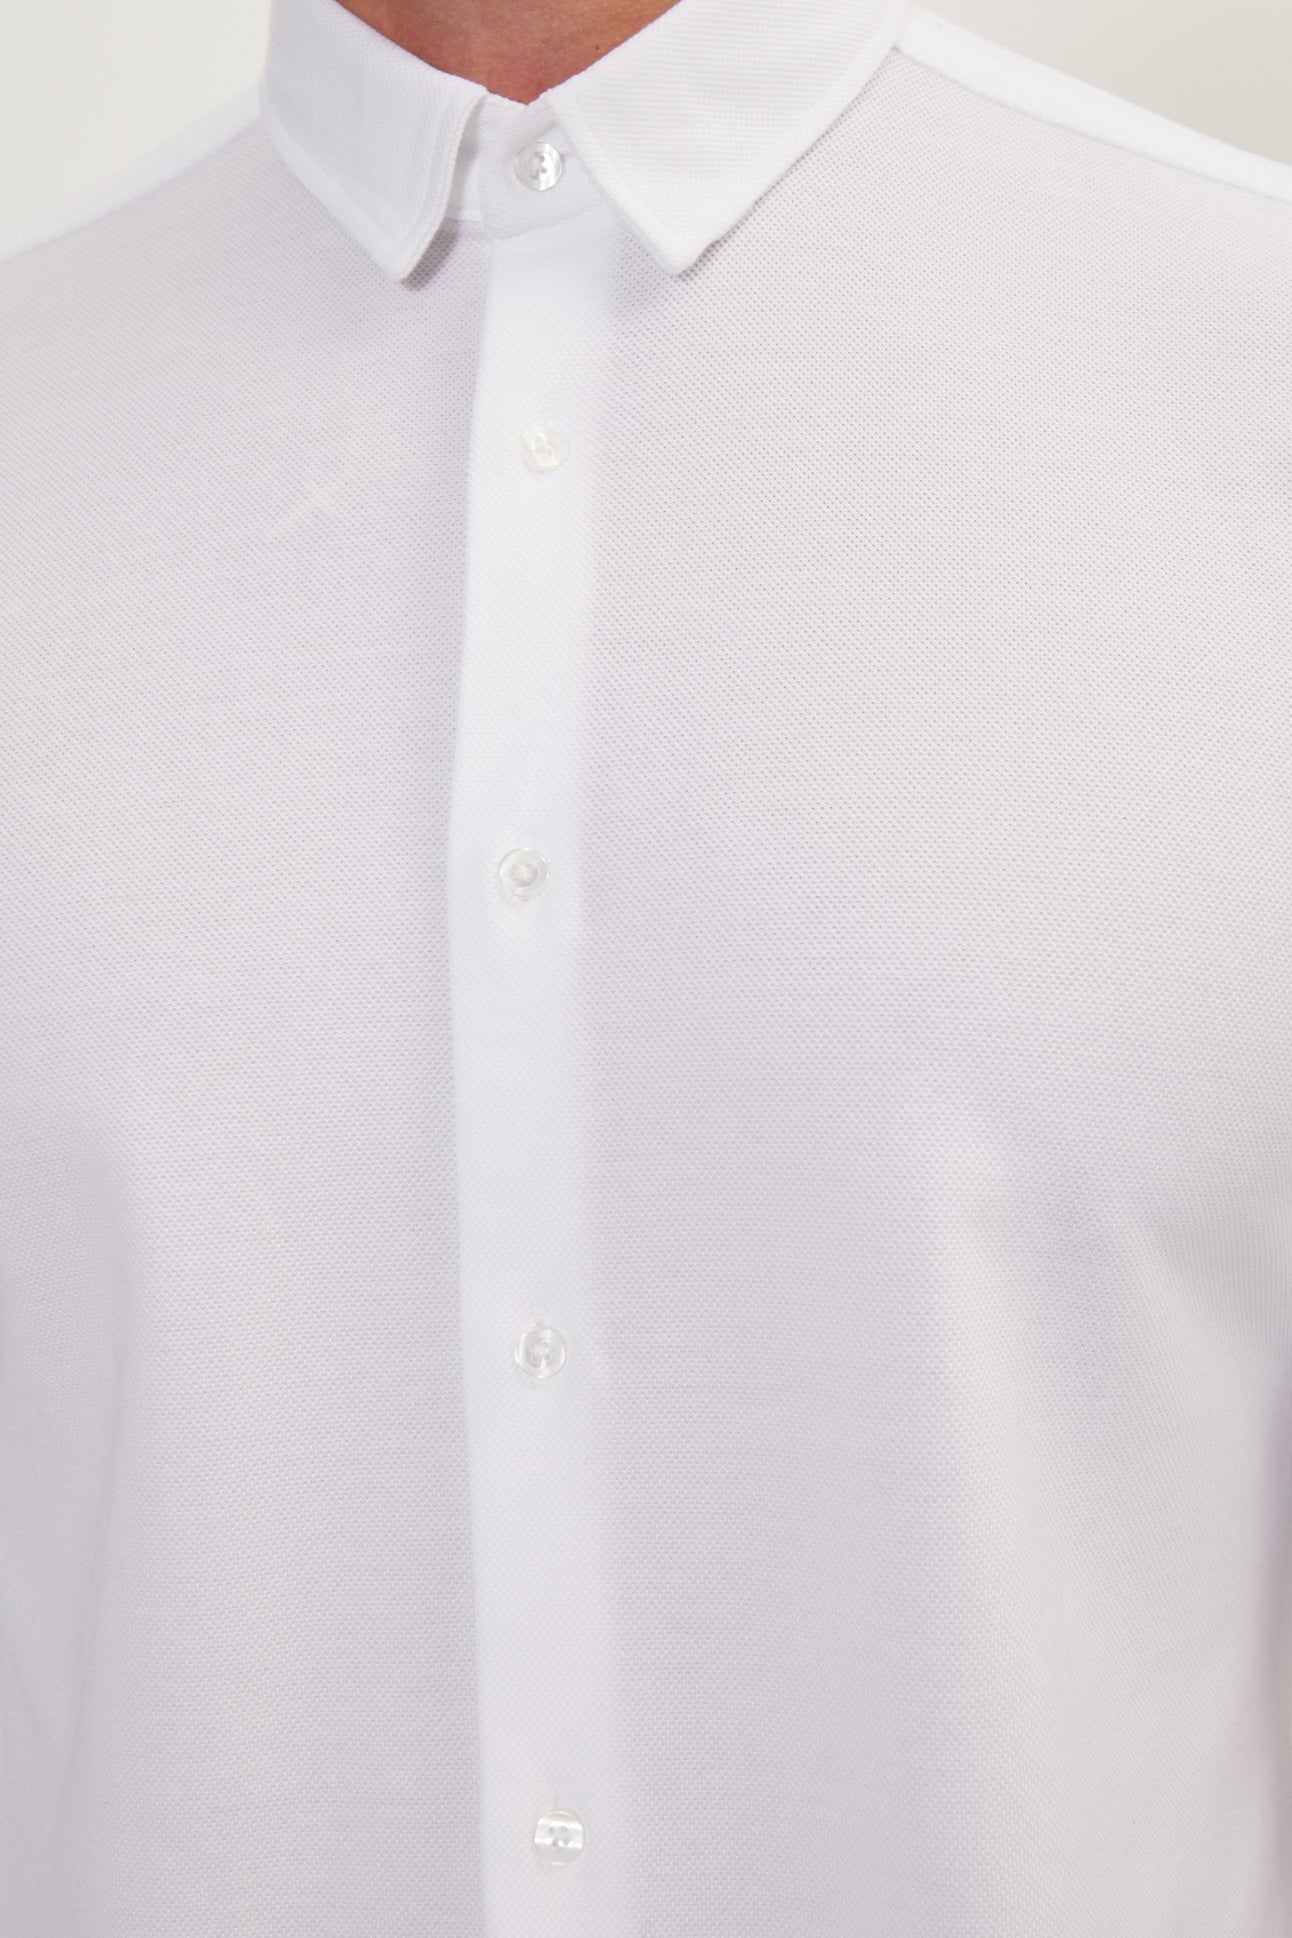 Pure Cotton Knit Travel Shirt - Pique Optic White - Ron Tomson